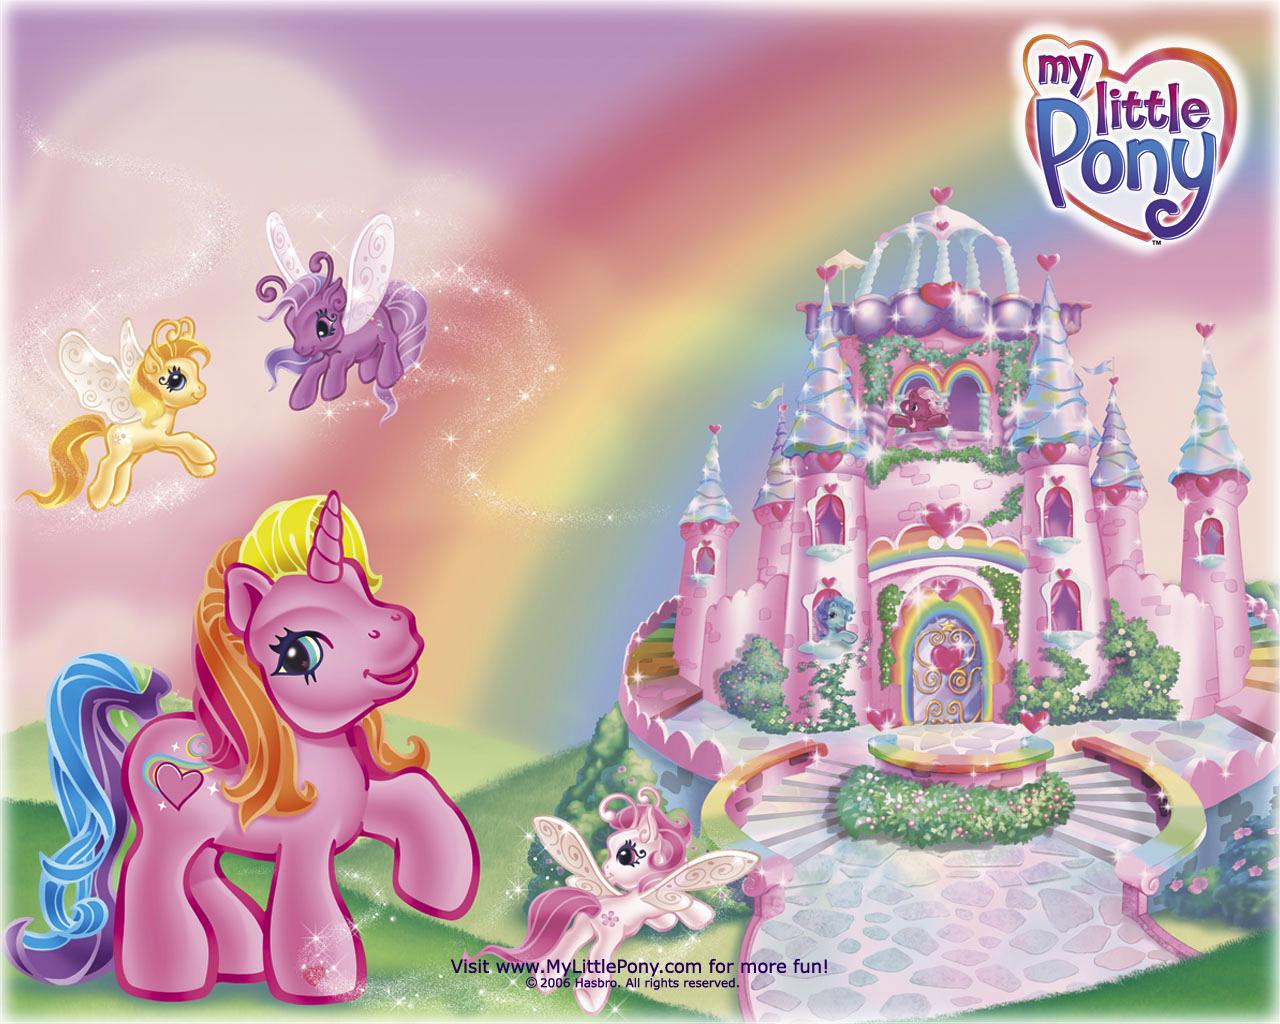 http://images.fanpop.com/images/image_uploads/My-Little-Pony-my-little-pony-256751_1280_1024.jpg